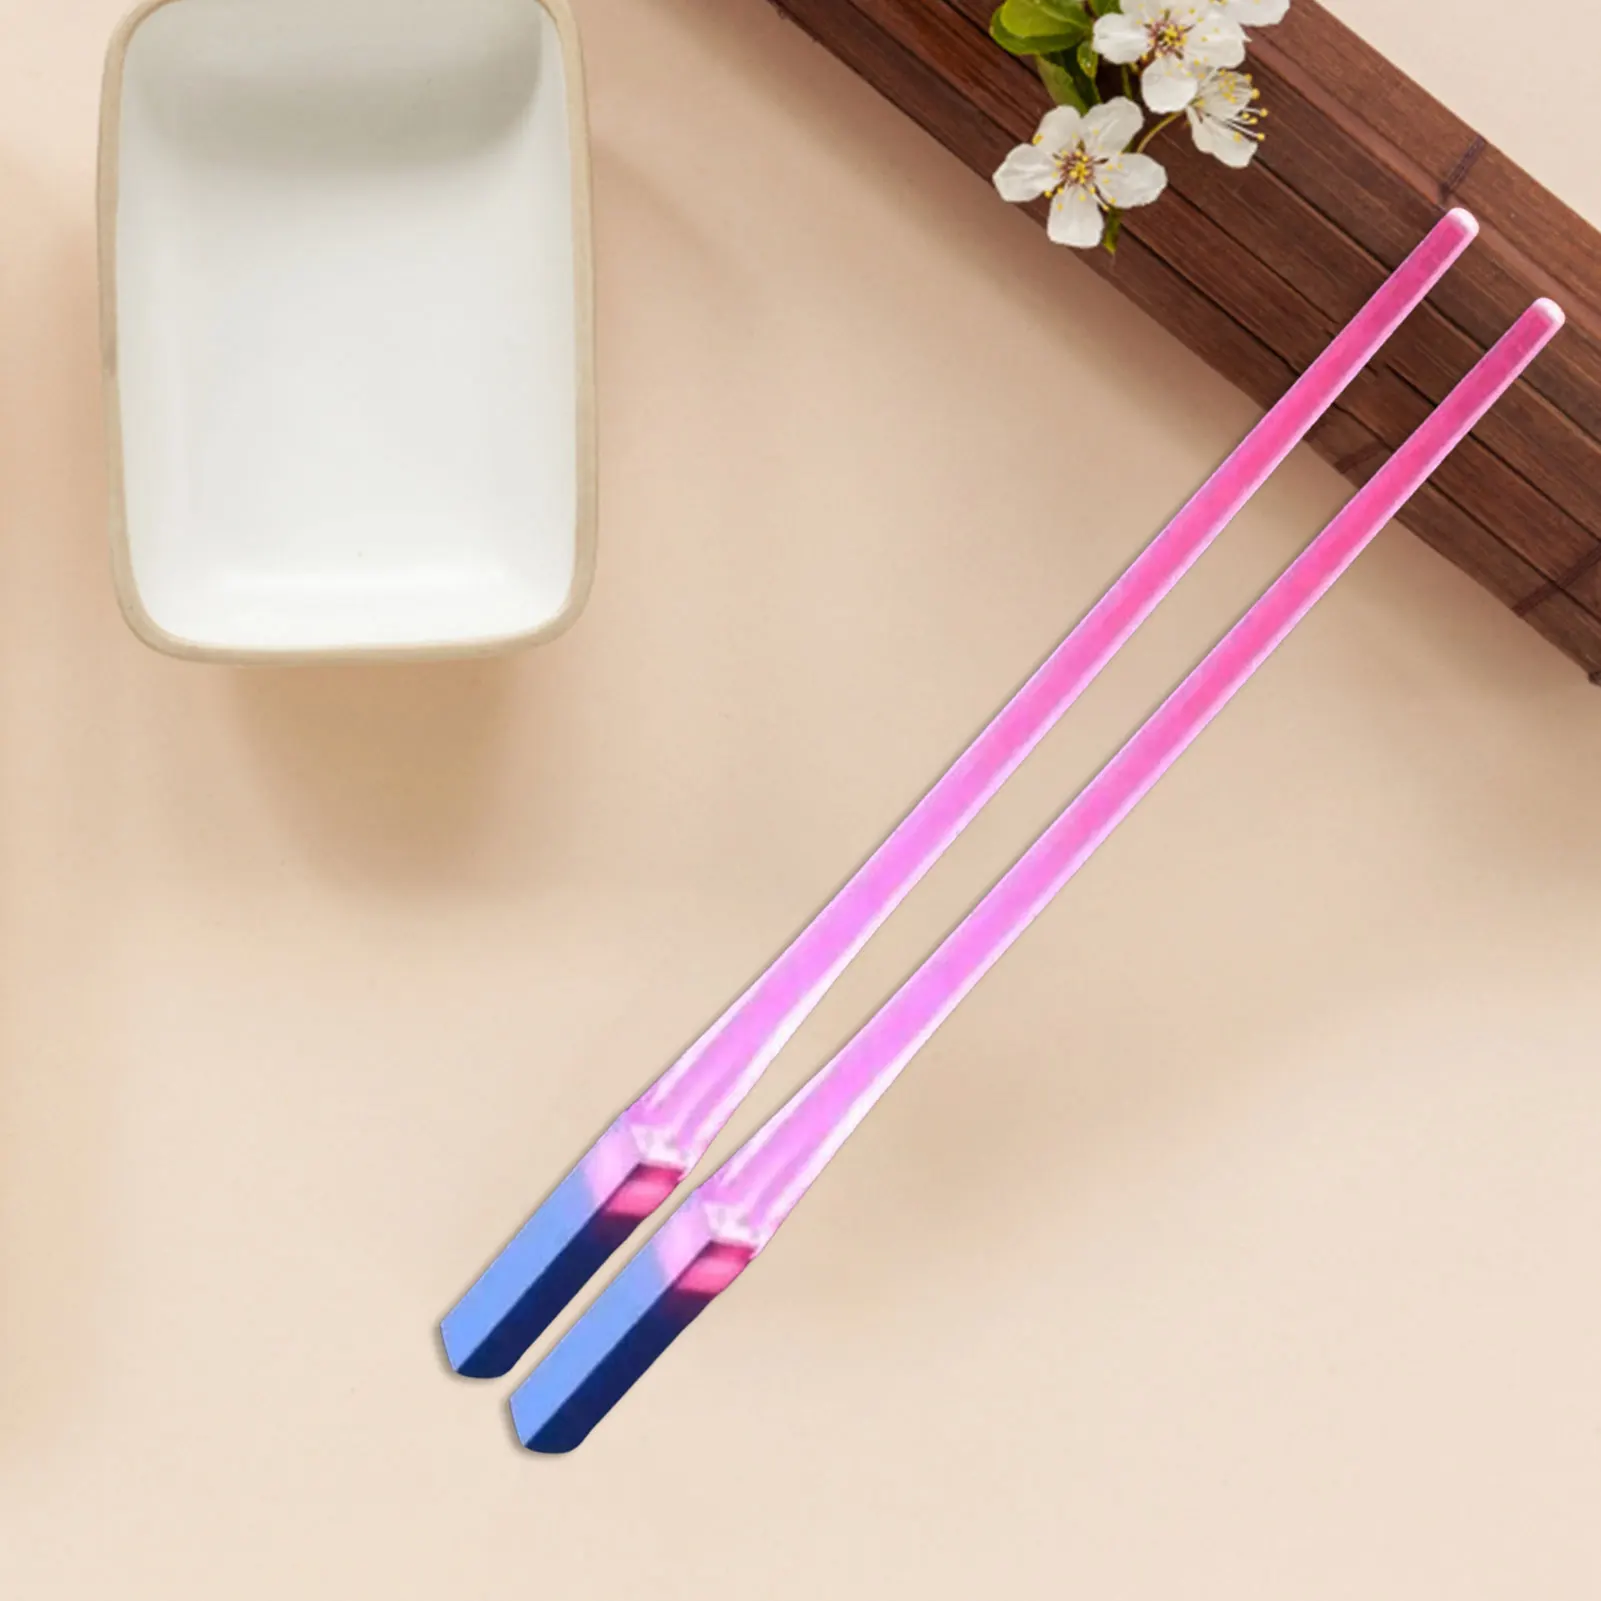 

1 Pair Of LED Lightsaber Chopsticks Glowing Light Up Chop Sticks Lightweight Durable Reusable Food-Grade Safe ABS Tableware For